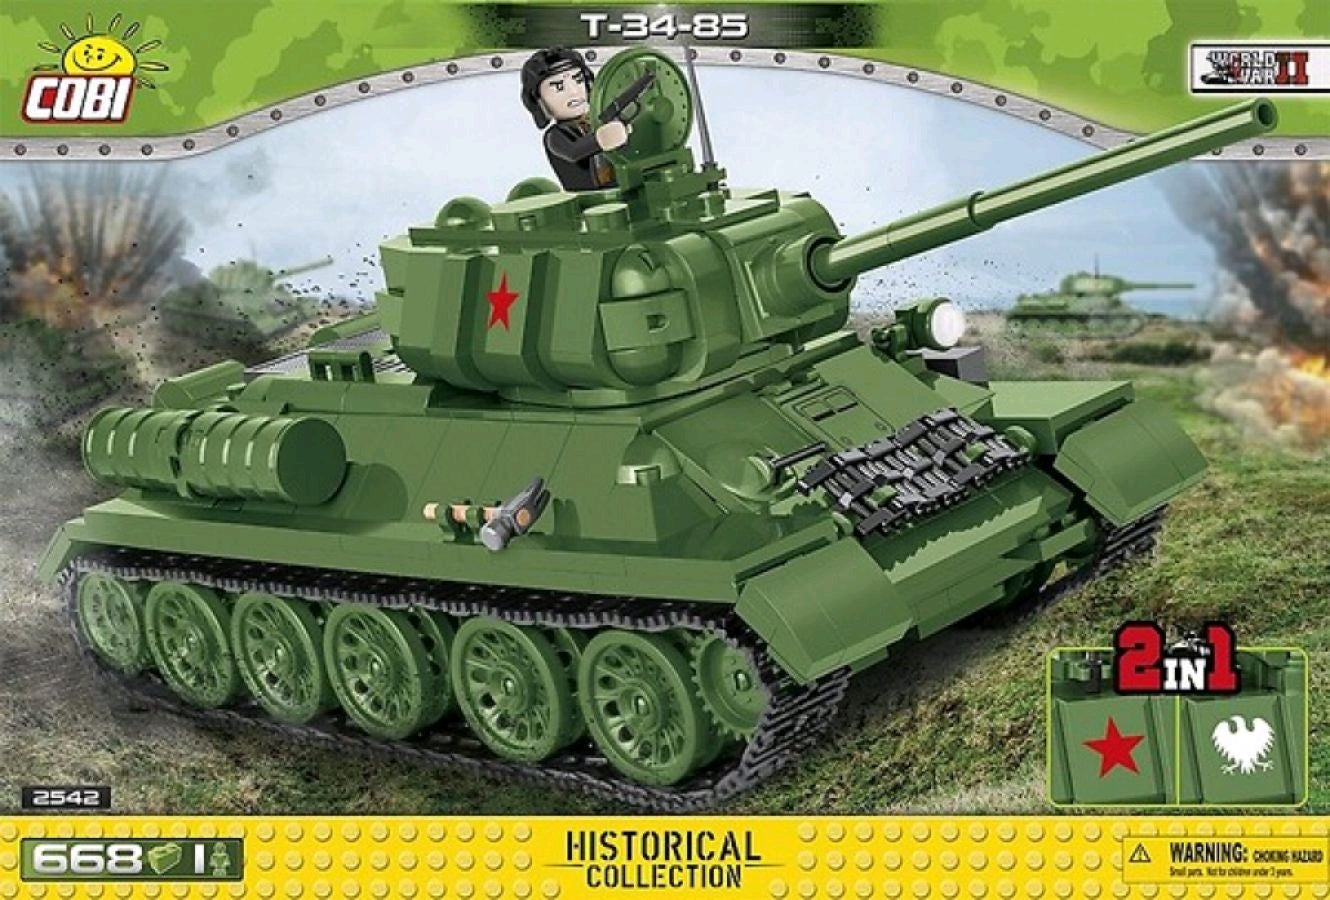 World War II - T-34-85 Tank 668 pieces